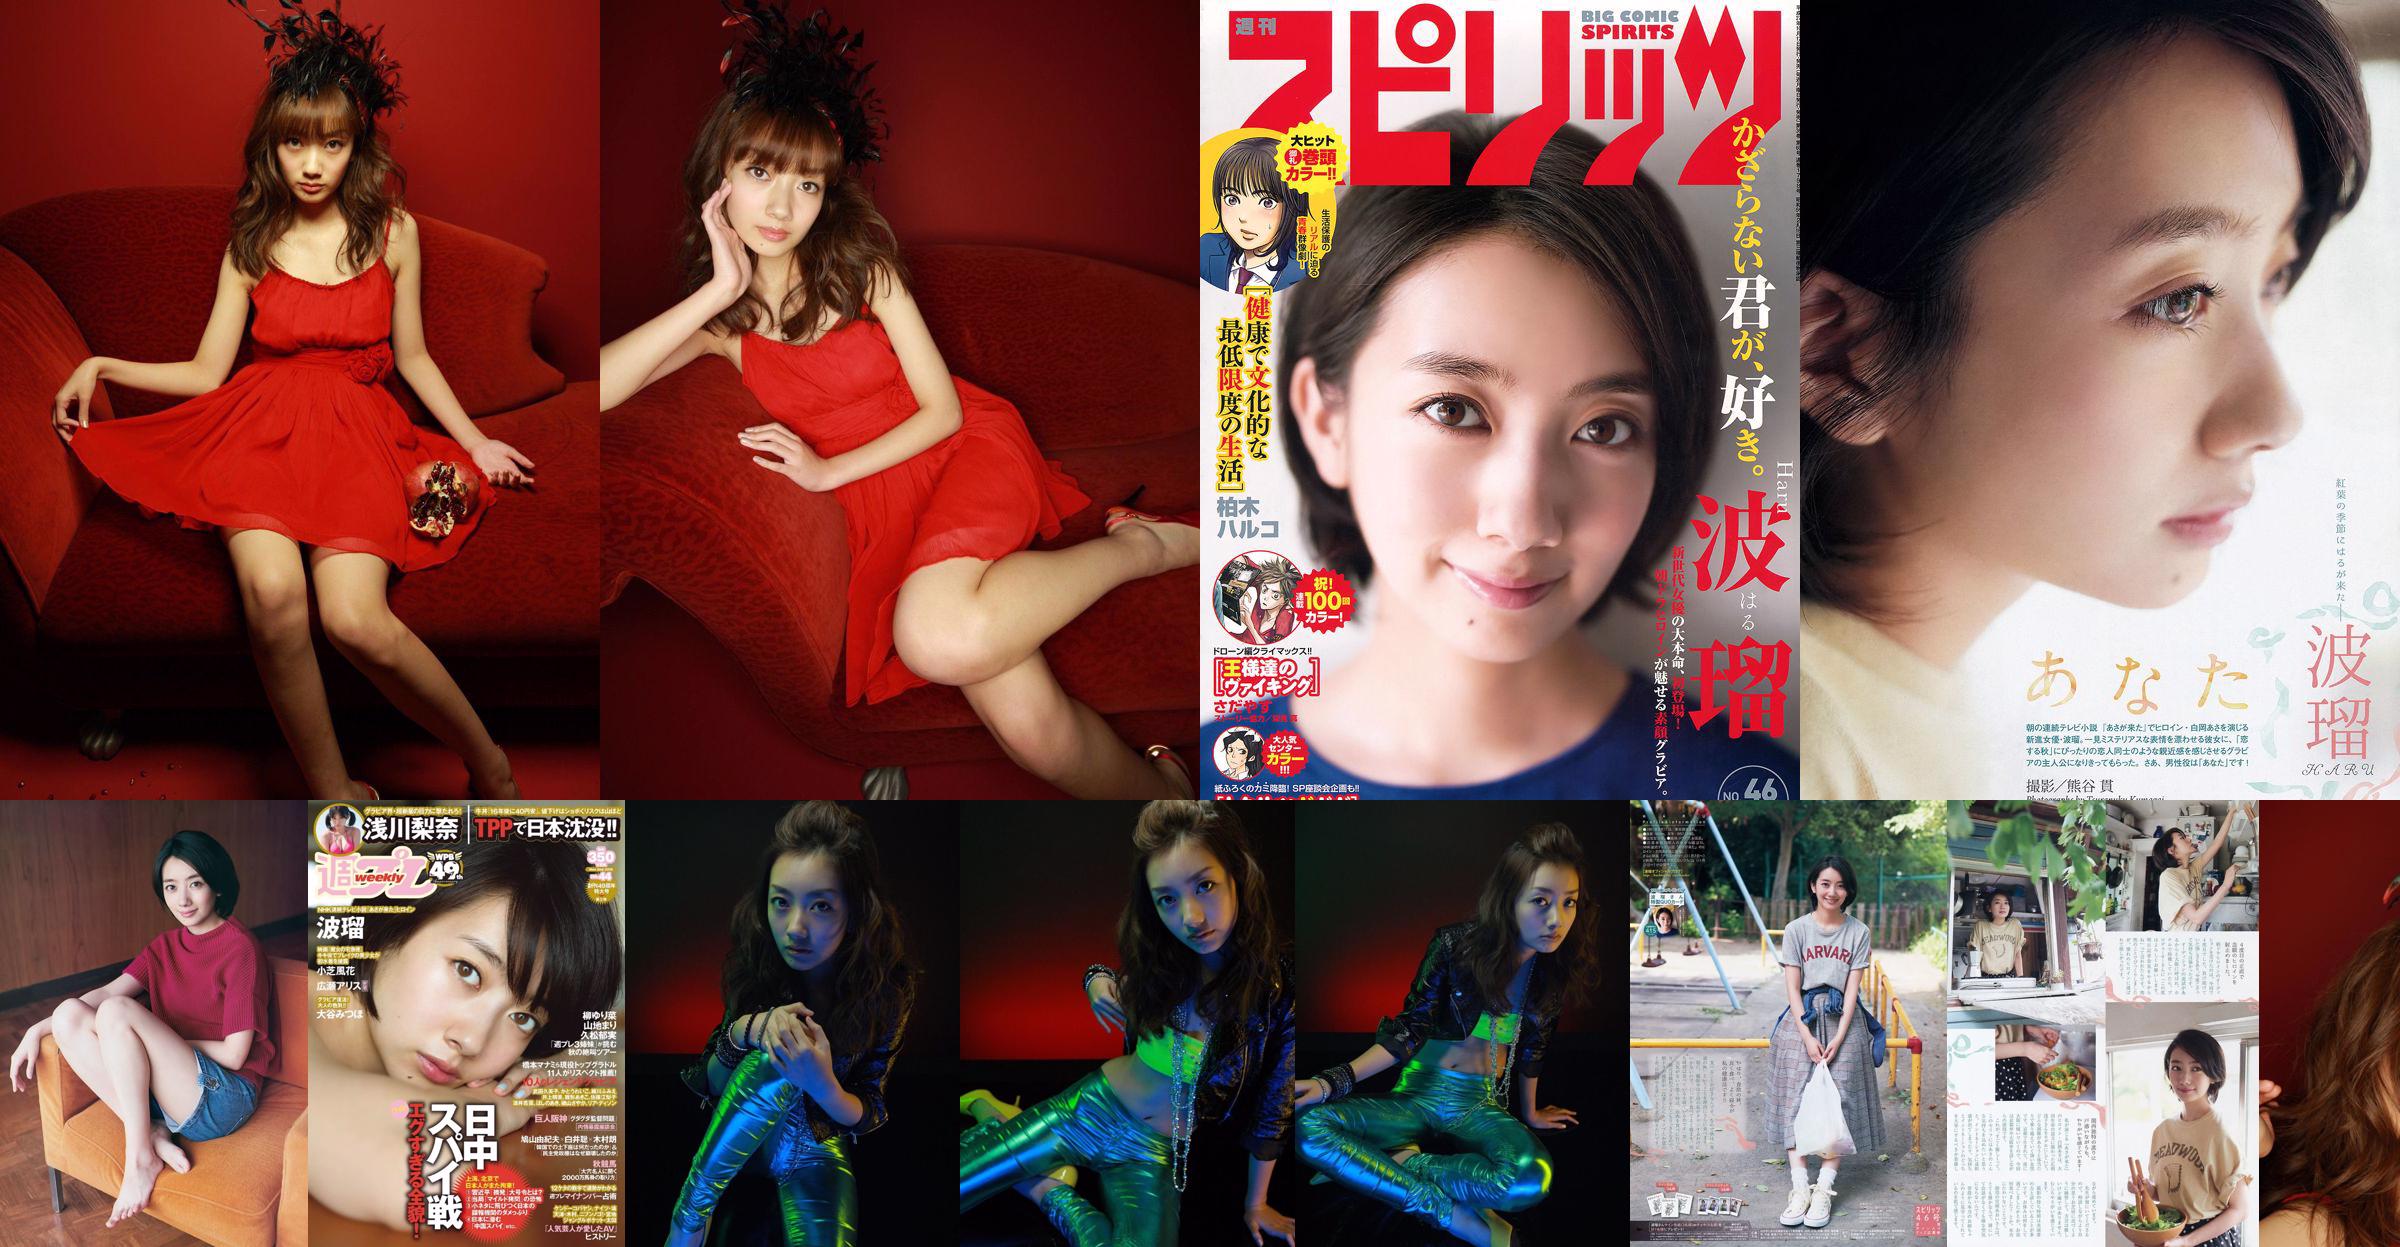 Nanboru "Super Beautiful Girl-Boruが初グラビアに戦戦" [Sabra.net] No.55f43a Page 1